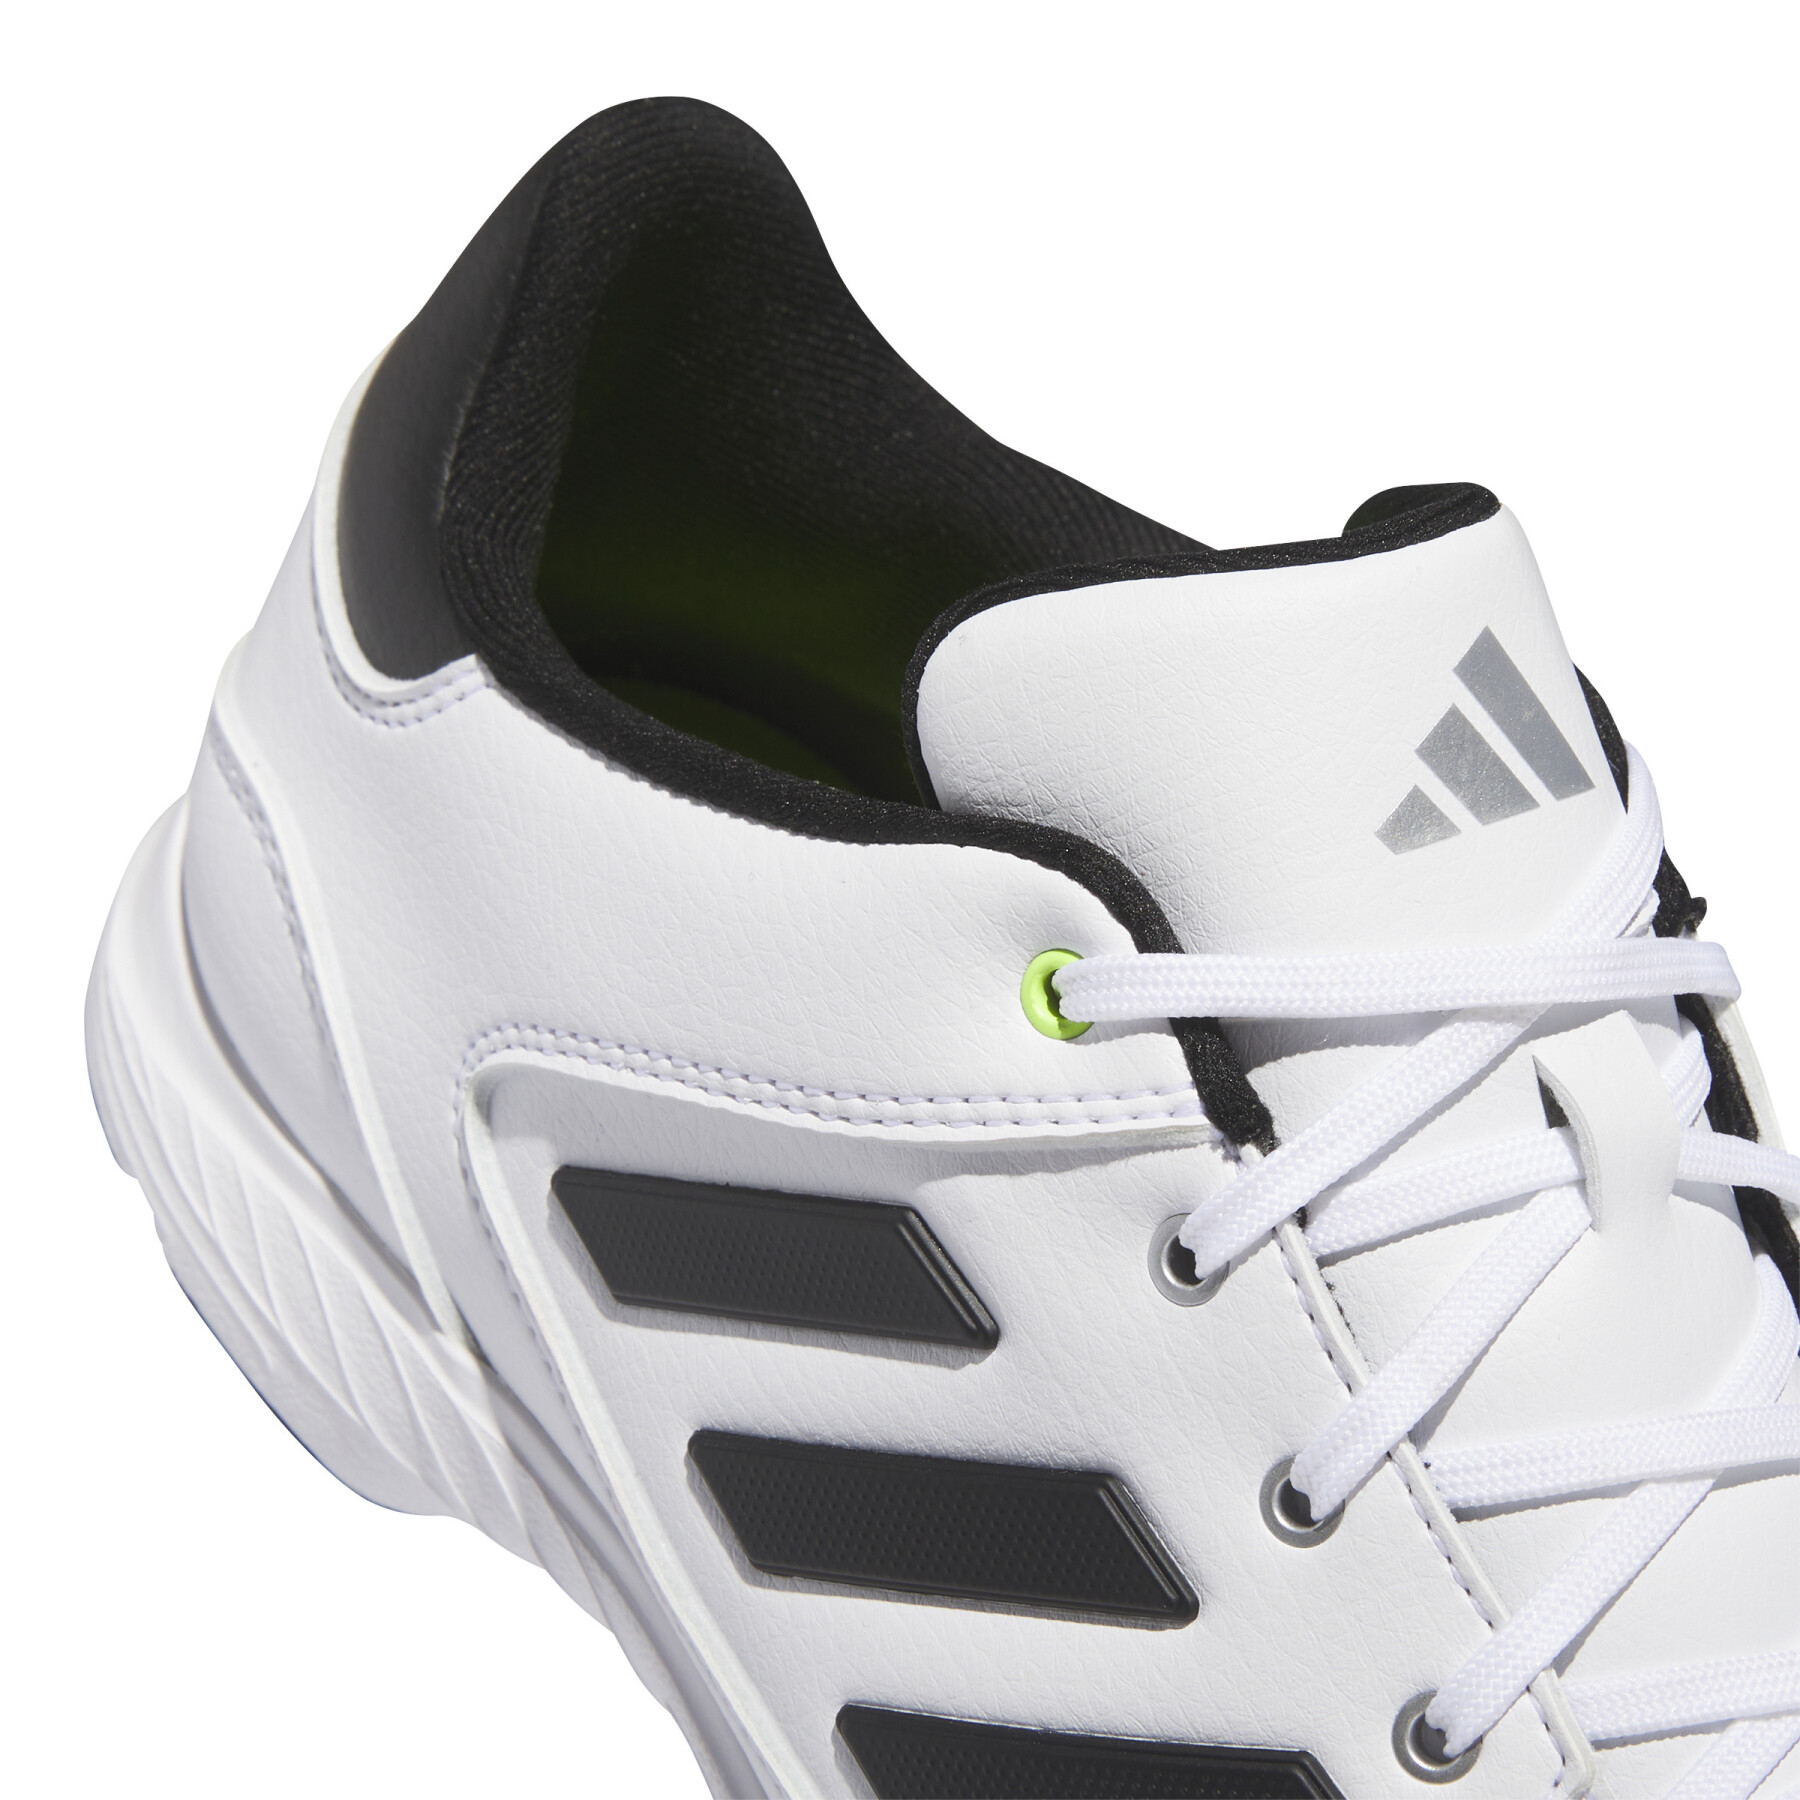 Chaussures de golf avec crampons adidas Golflite Max 24